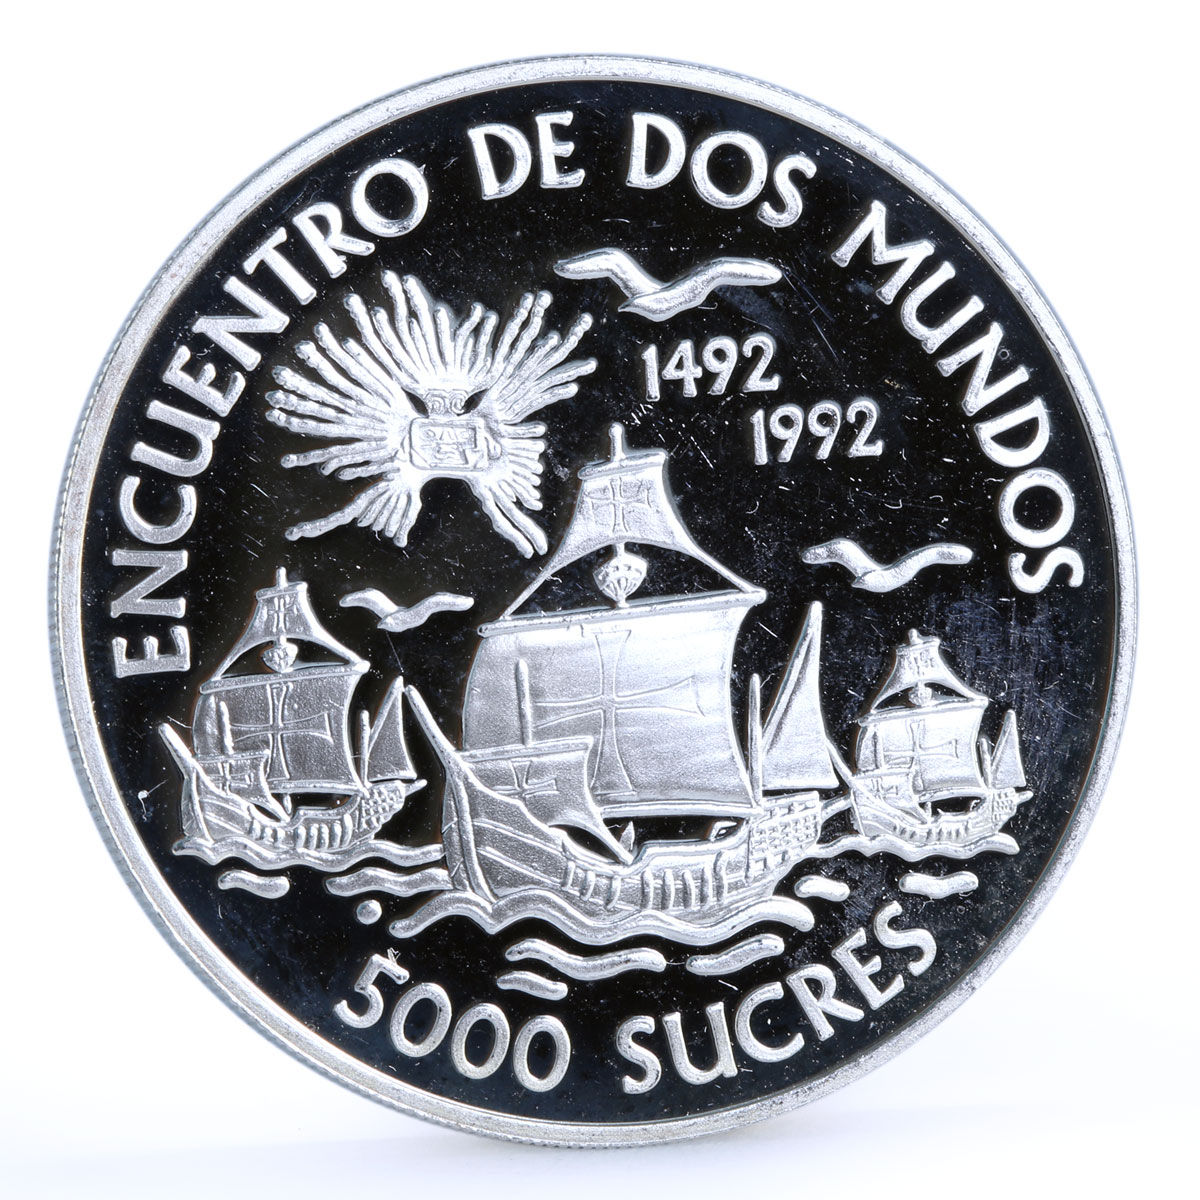 Ecuador 5000 sucres Columbus Seafaring Ships Clippers proof silver coin 1991